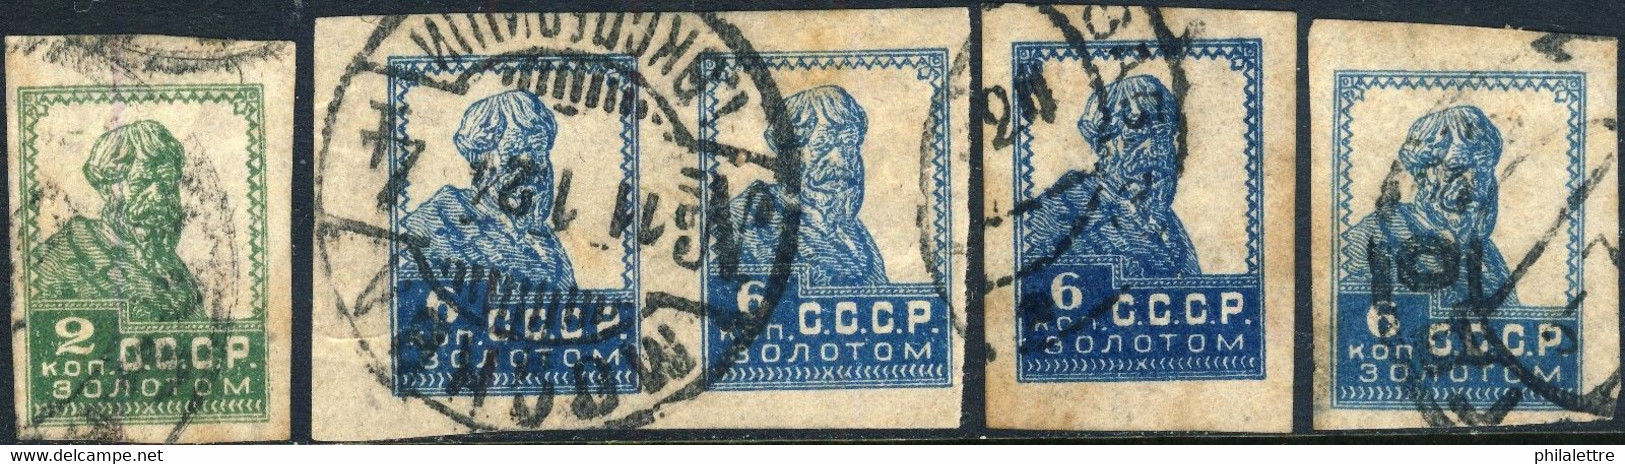 URSS / USSR - Soviet Union - 1923/4 - Mi.229.1 & 4xMi.233.I Imperf / No Wmk - VFU - Used Stamps